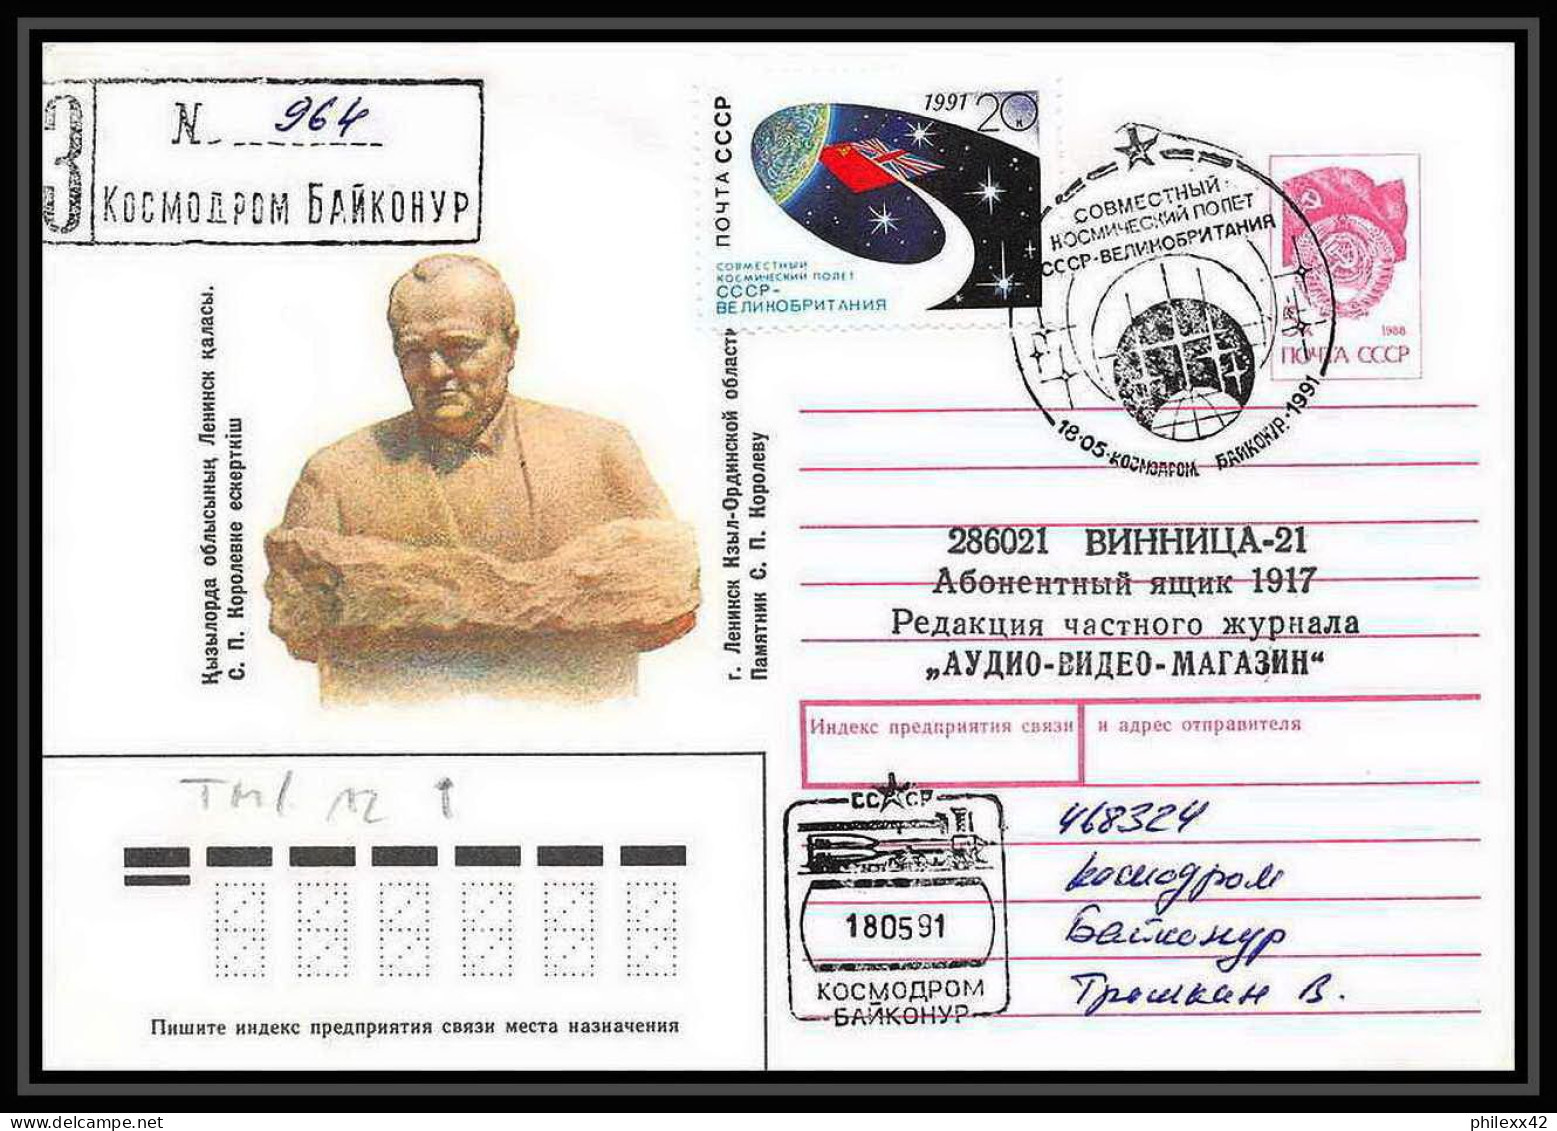 10335/ Espace (space) Entier Postal (Stamped Stationery) 18/4/1991 Soyuz (soyouz Sojus) Start Tm-12 Korolev (urss USSR) - Rusia & URSS